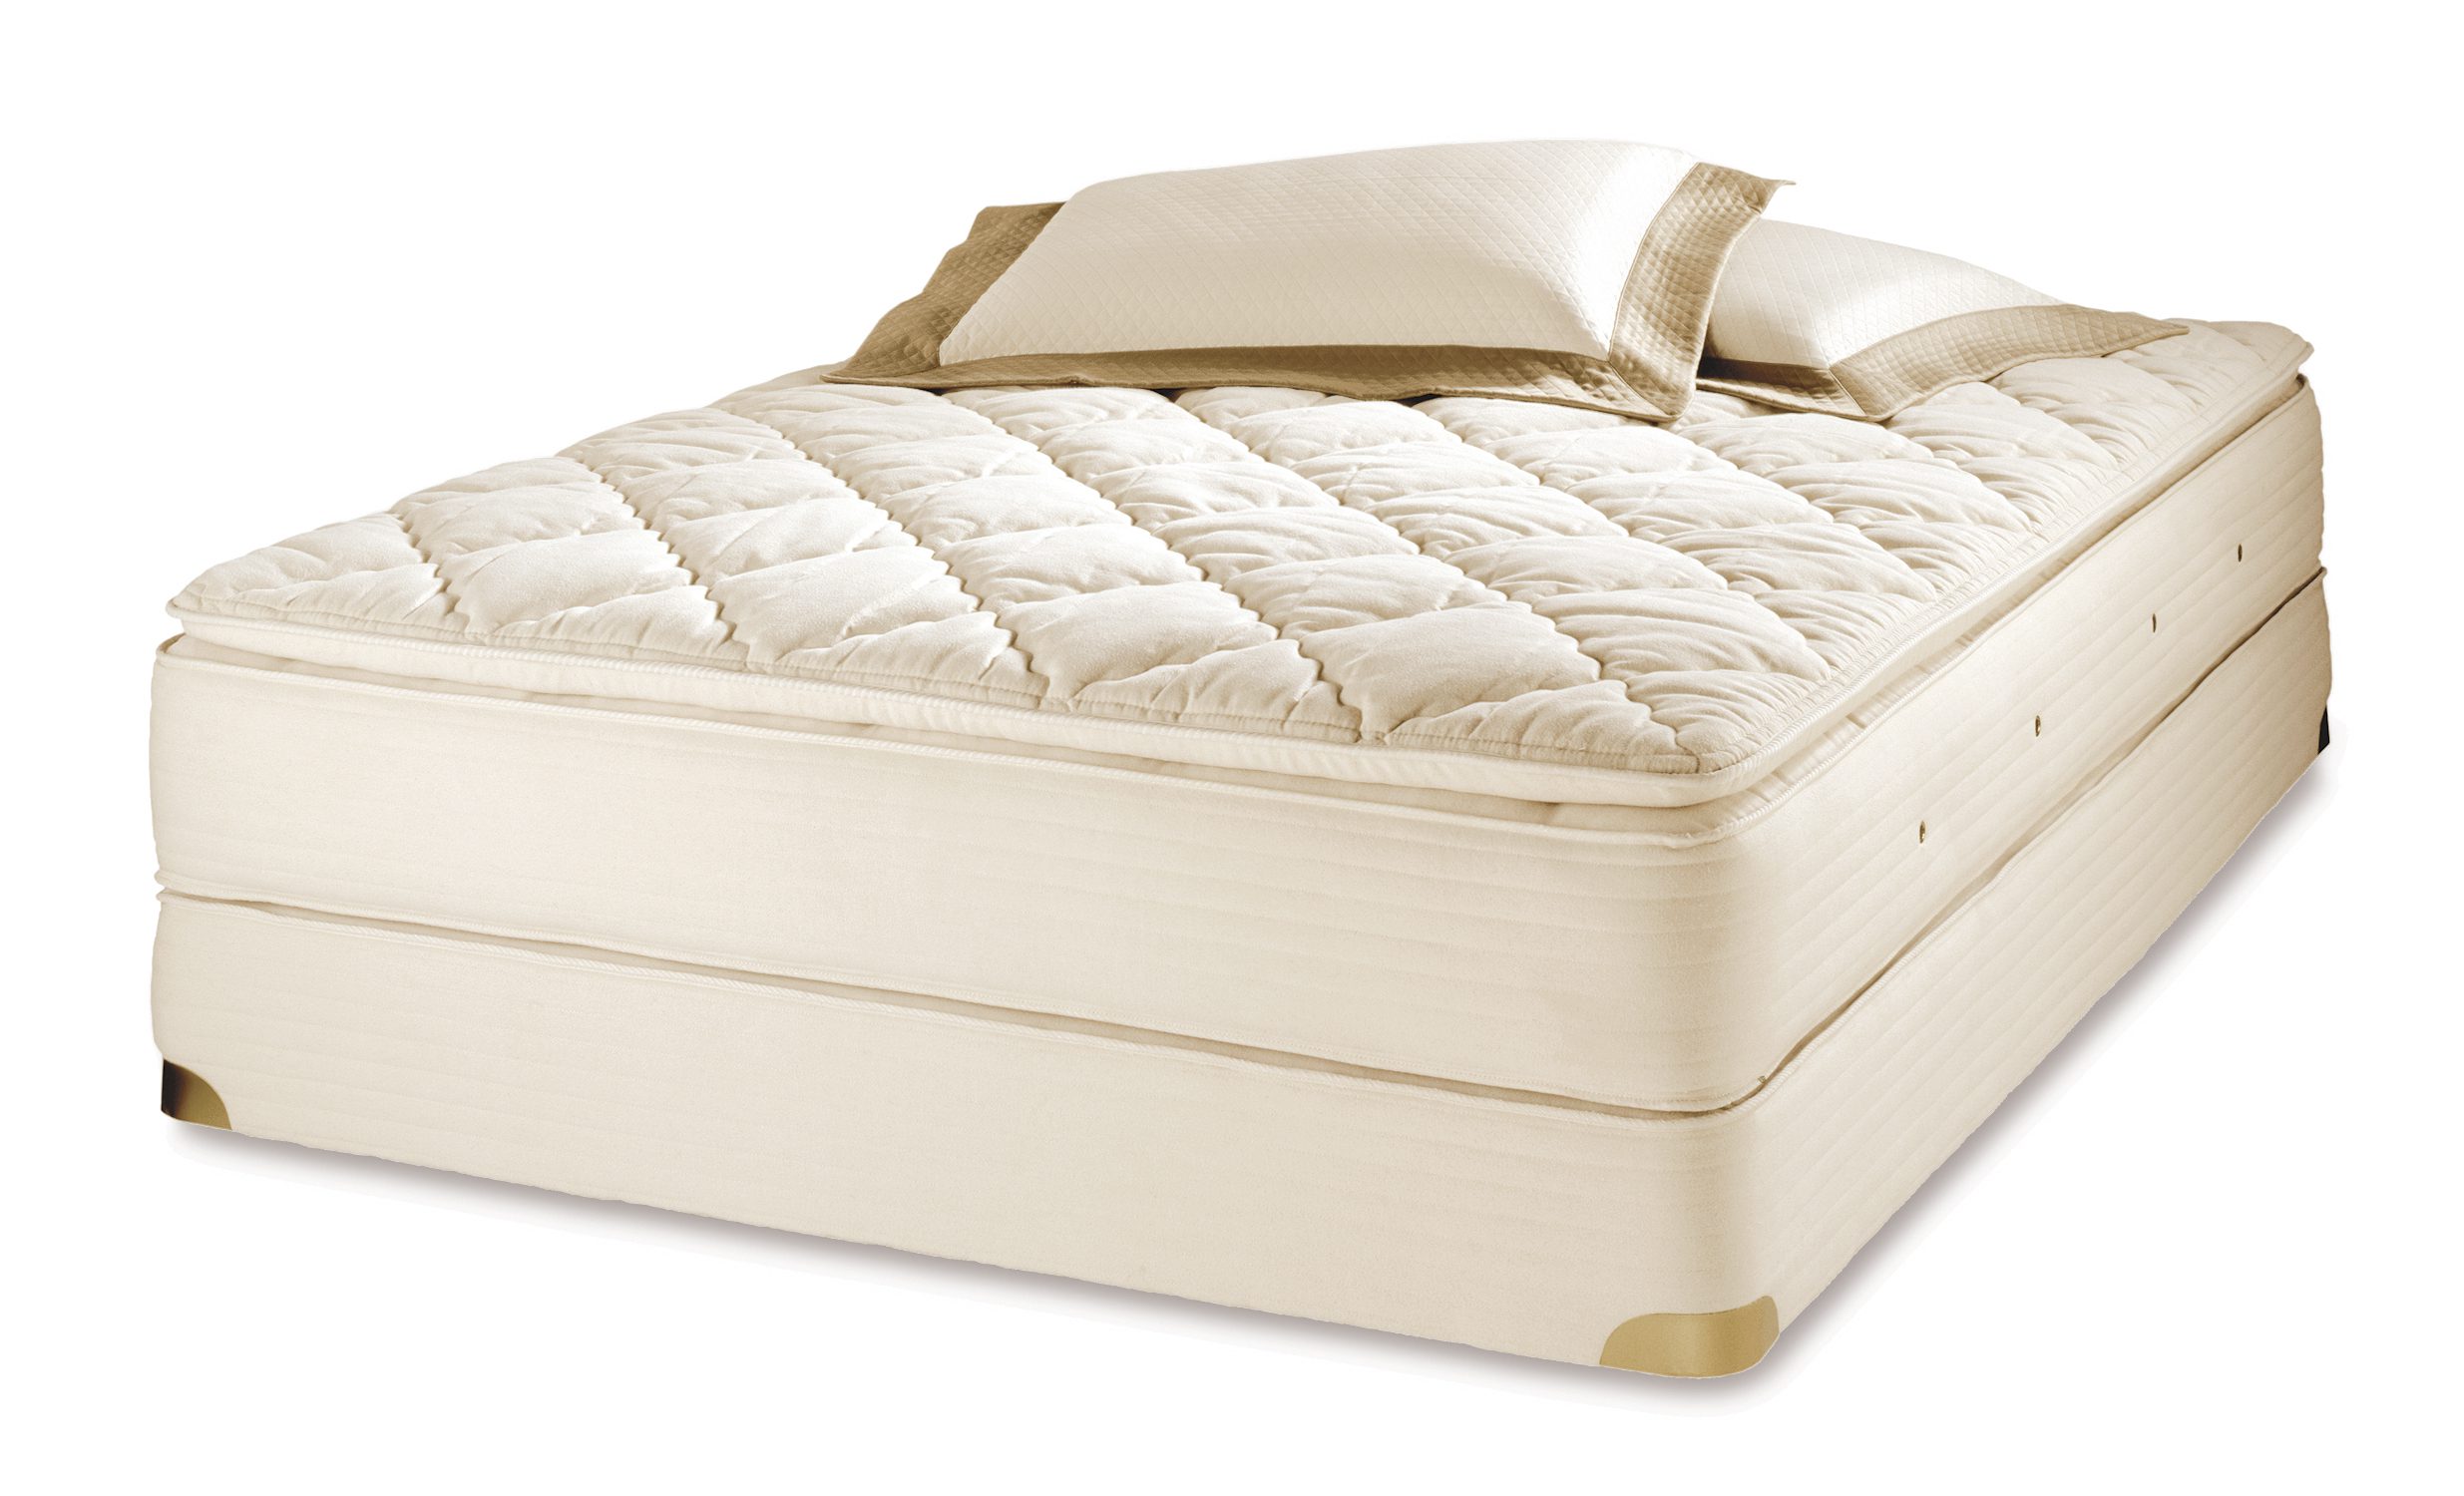 royal pedic adjustable bed with latex mattress